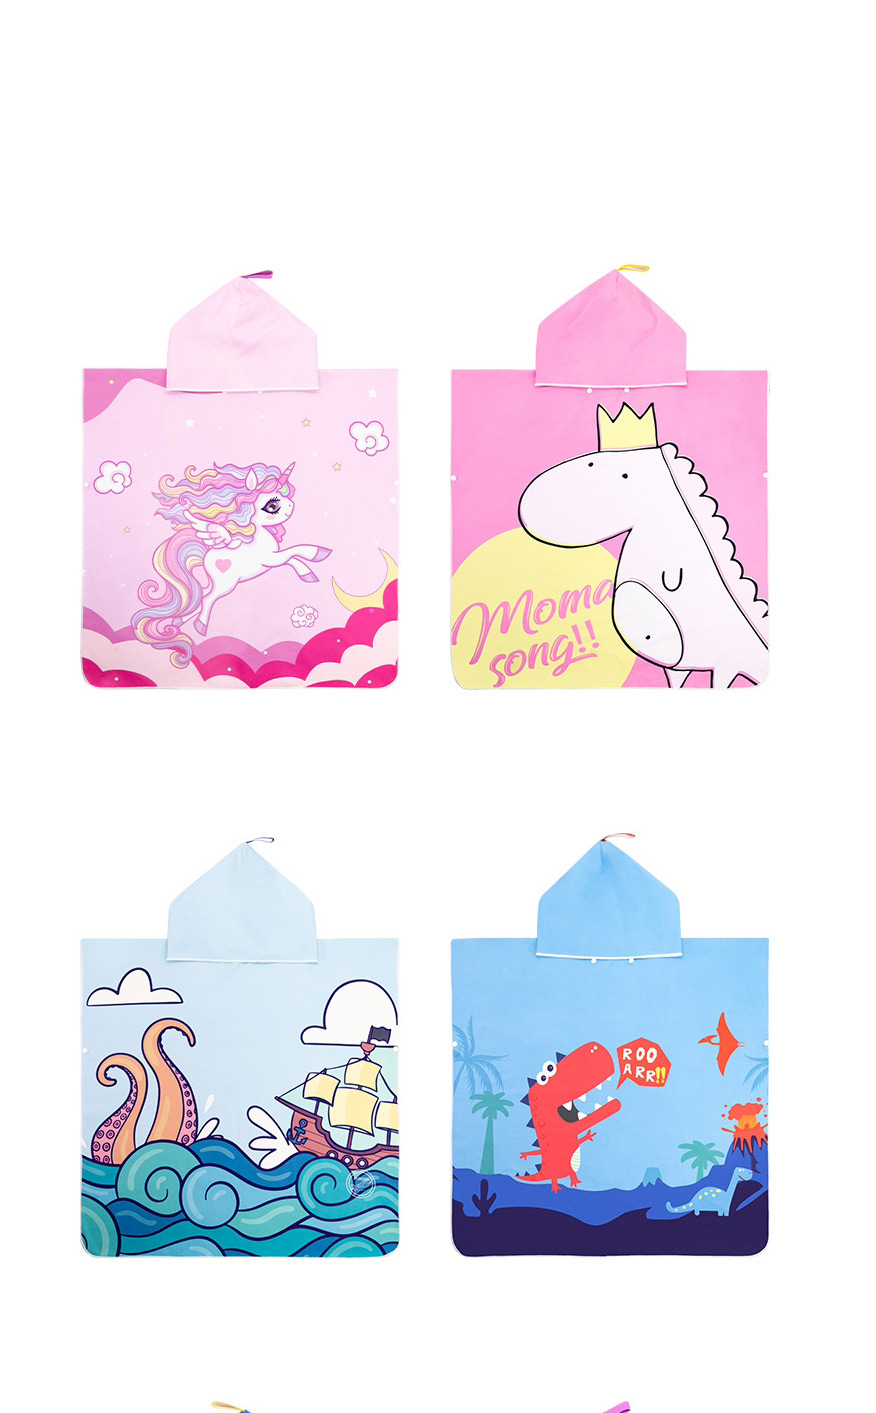 Fashion Flame Dinosaur Microfiber Cartoon Print Childrens Hooded Bath Towel,Kids Swimwear